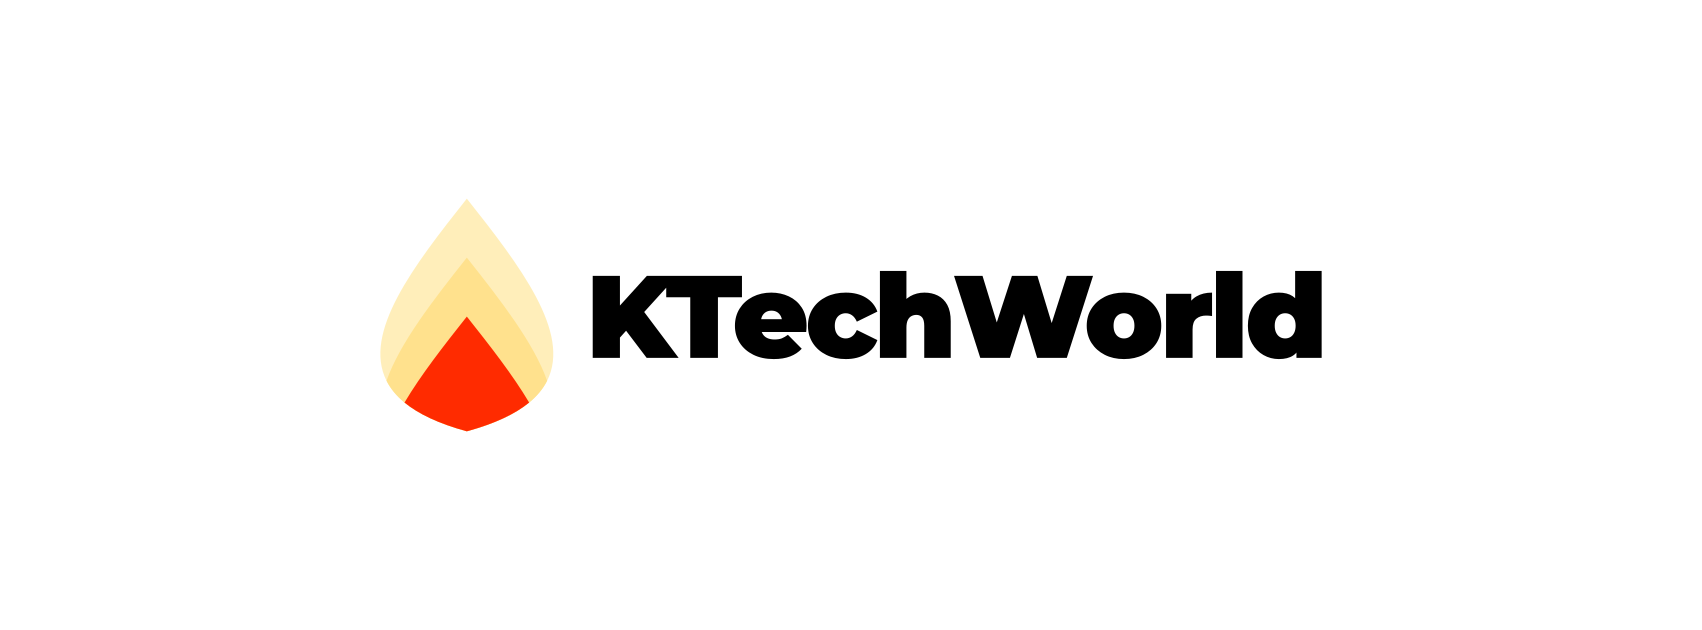 KTechWorld